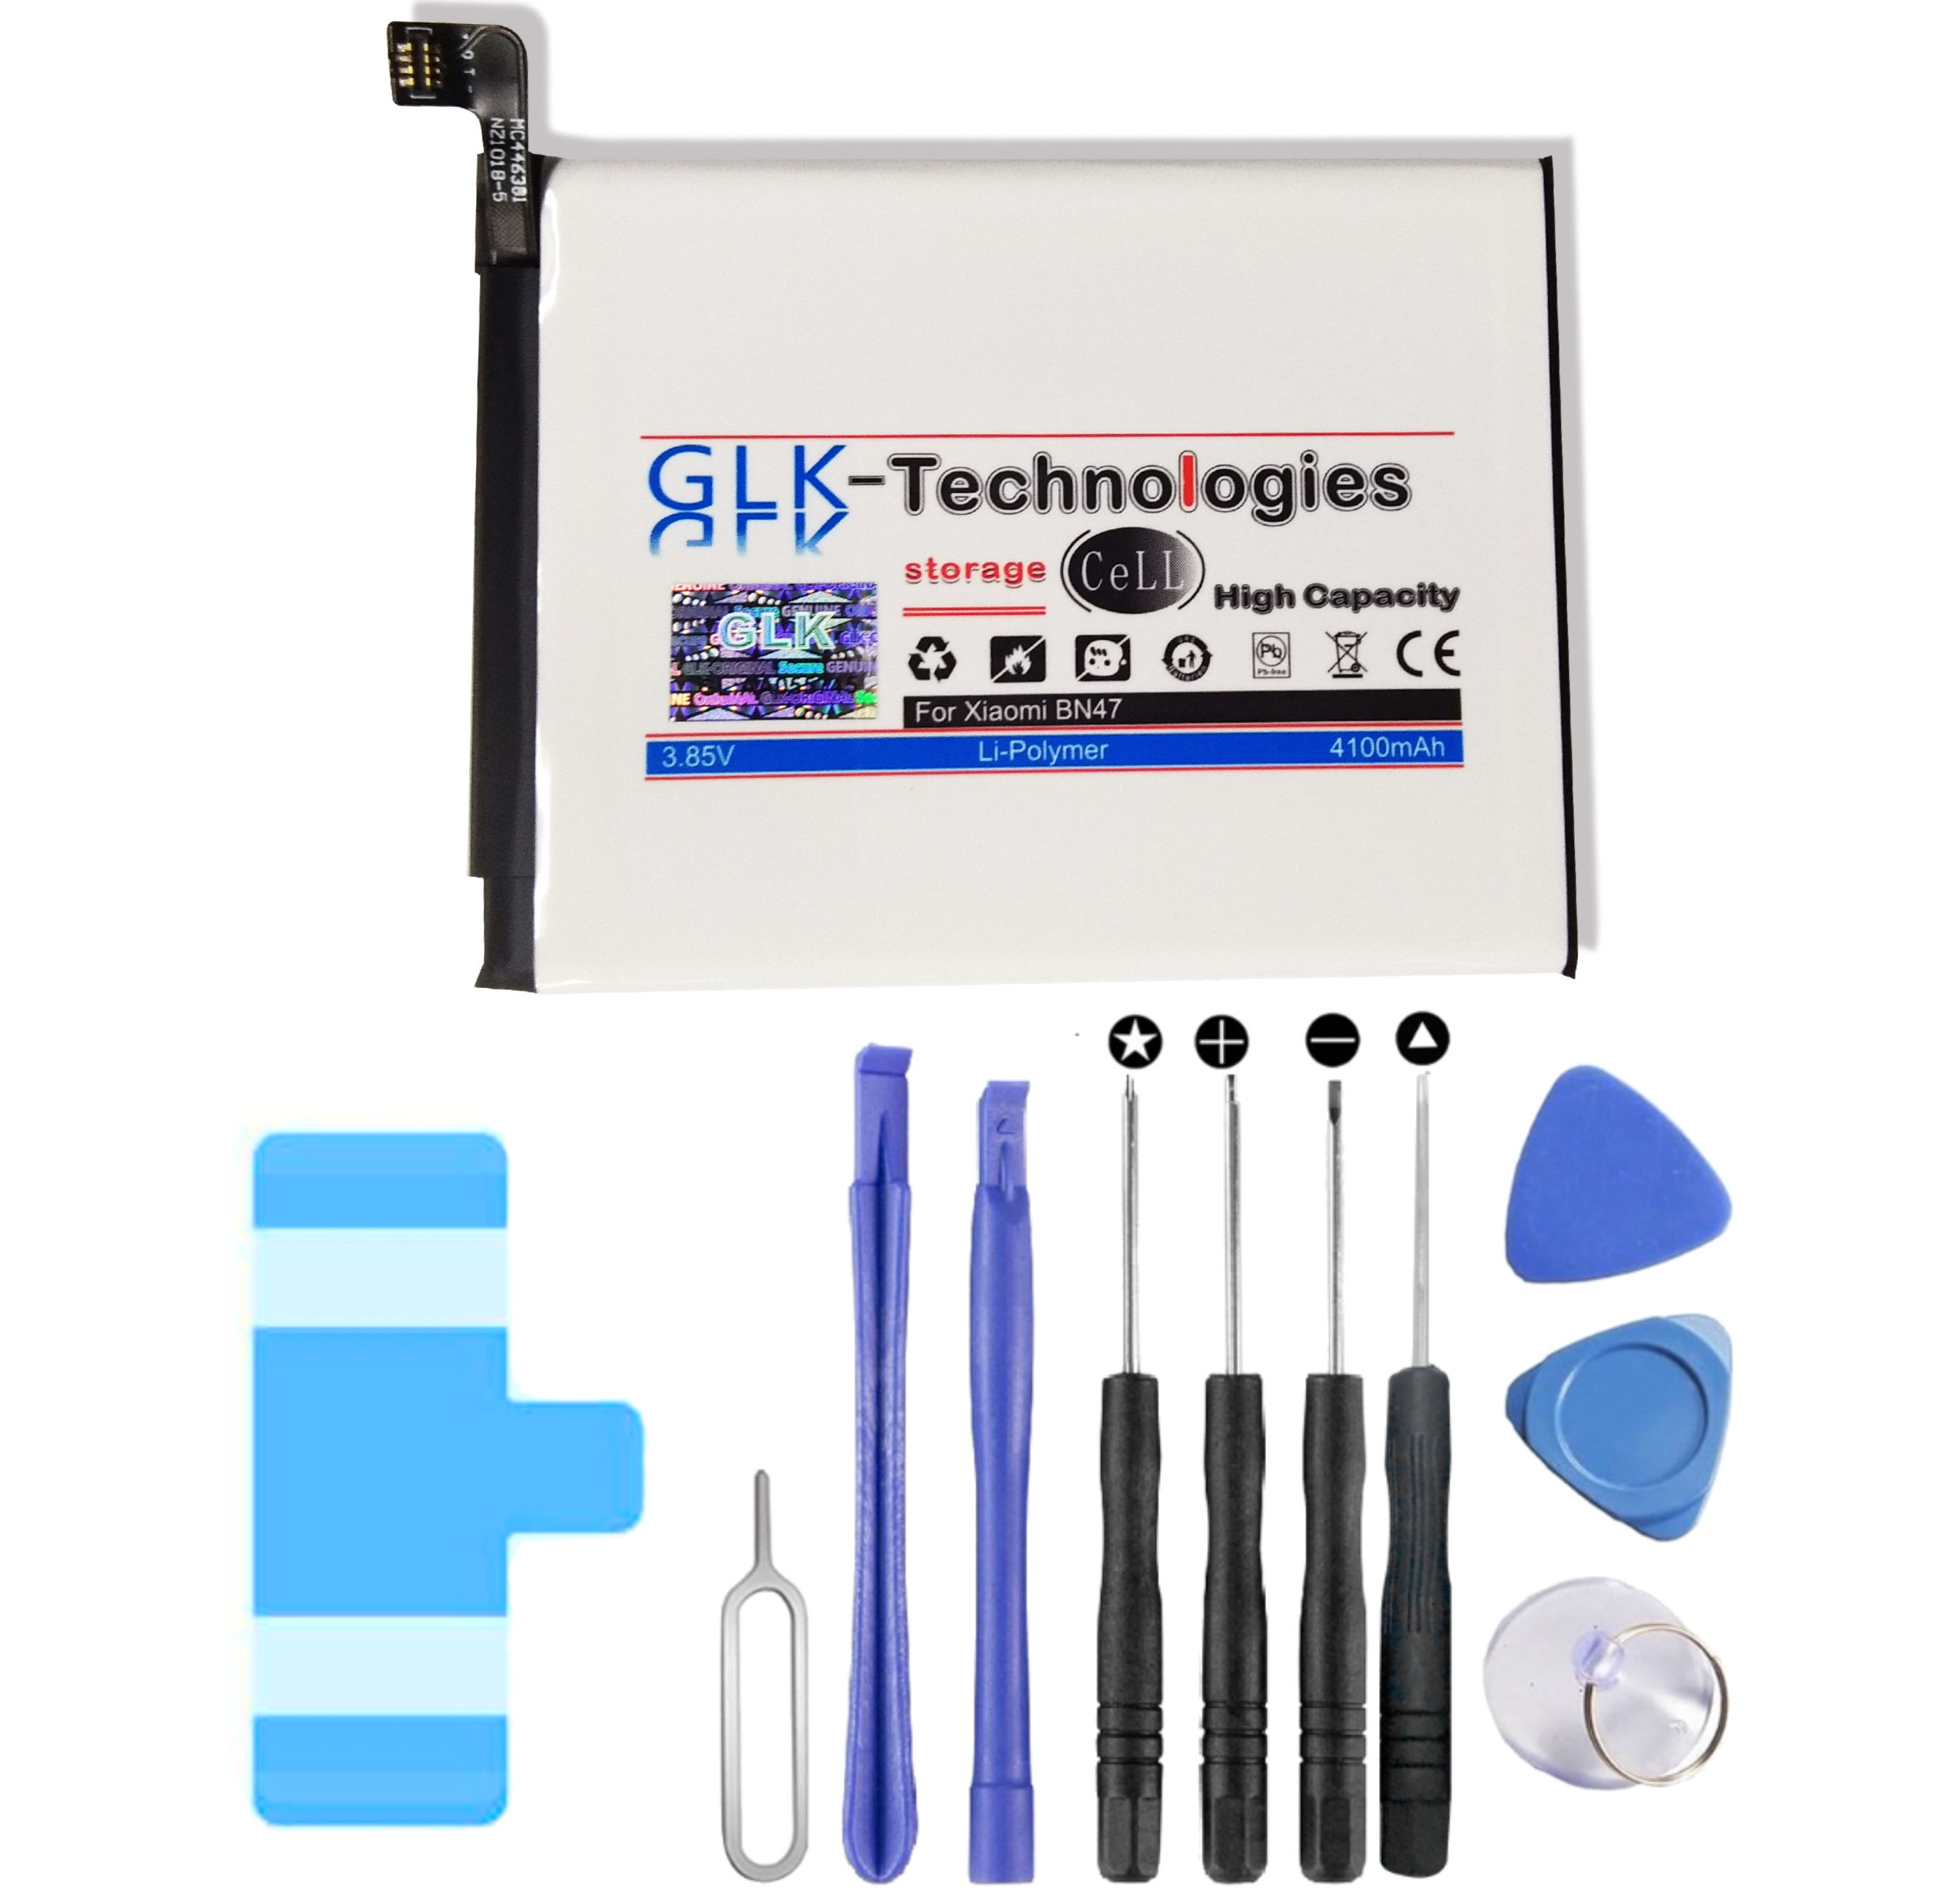 GLK-TECHNOLOGIES High Power Ersatz Akku Ersatz RedMi A2 Li-Ion Akku Lite Werkzeug für inkl. BN47 6 Xiaomi Pro Smartphone 4100 Mi Battery mAh